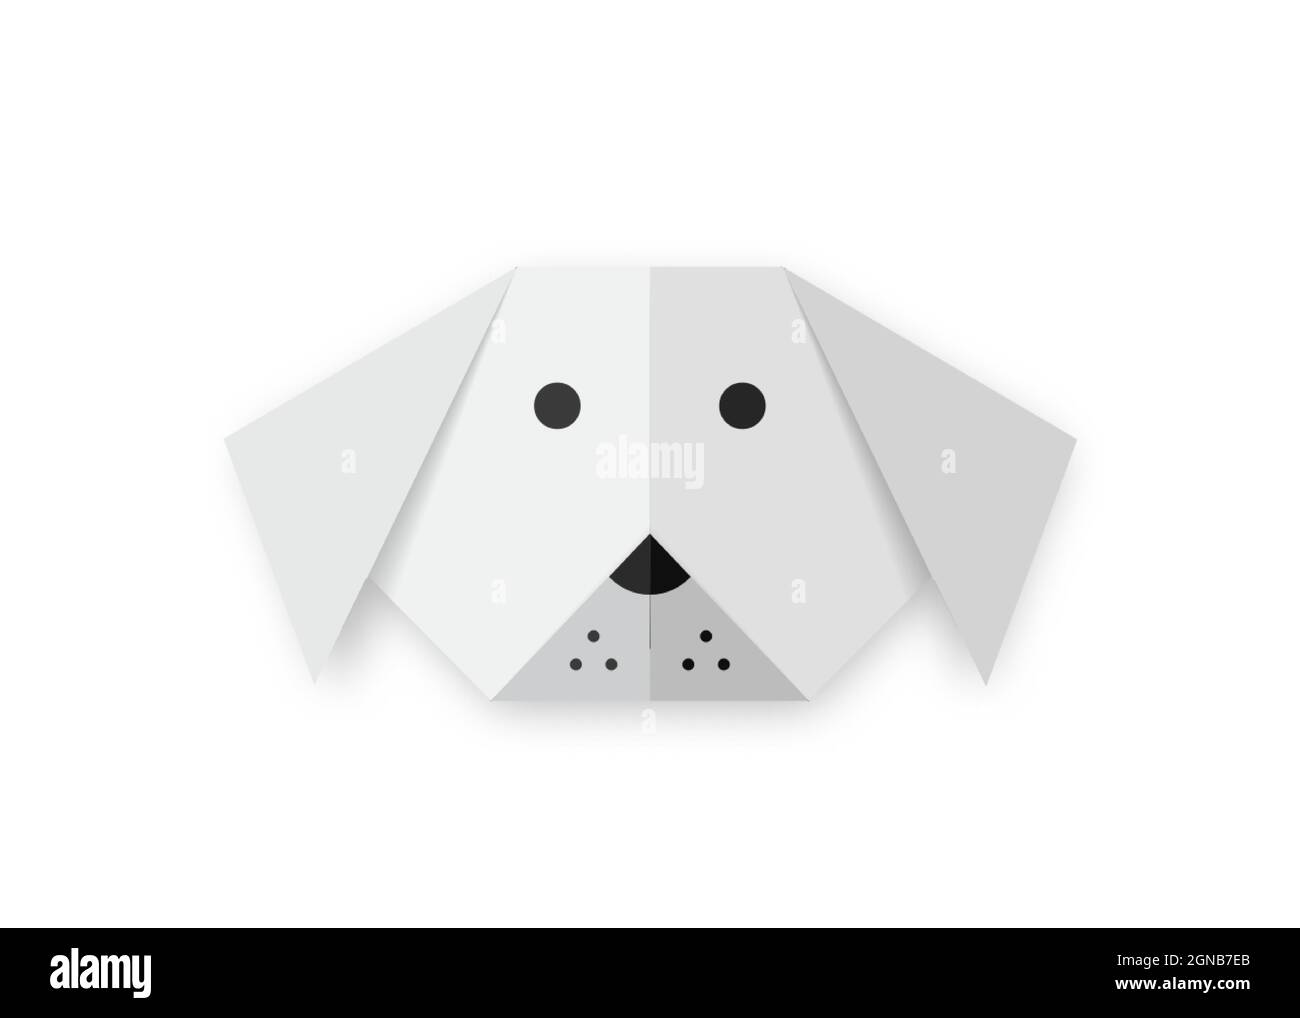 Origami Folded Paper Dog animal shape, white paper cut art design for kids, vector isolated on white background Stock Vector